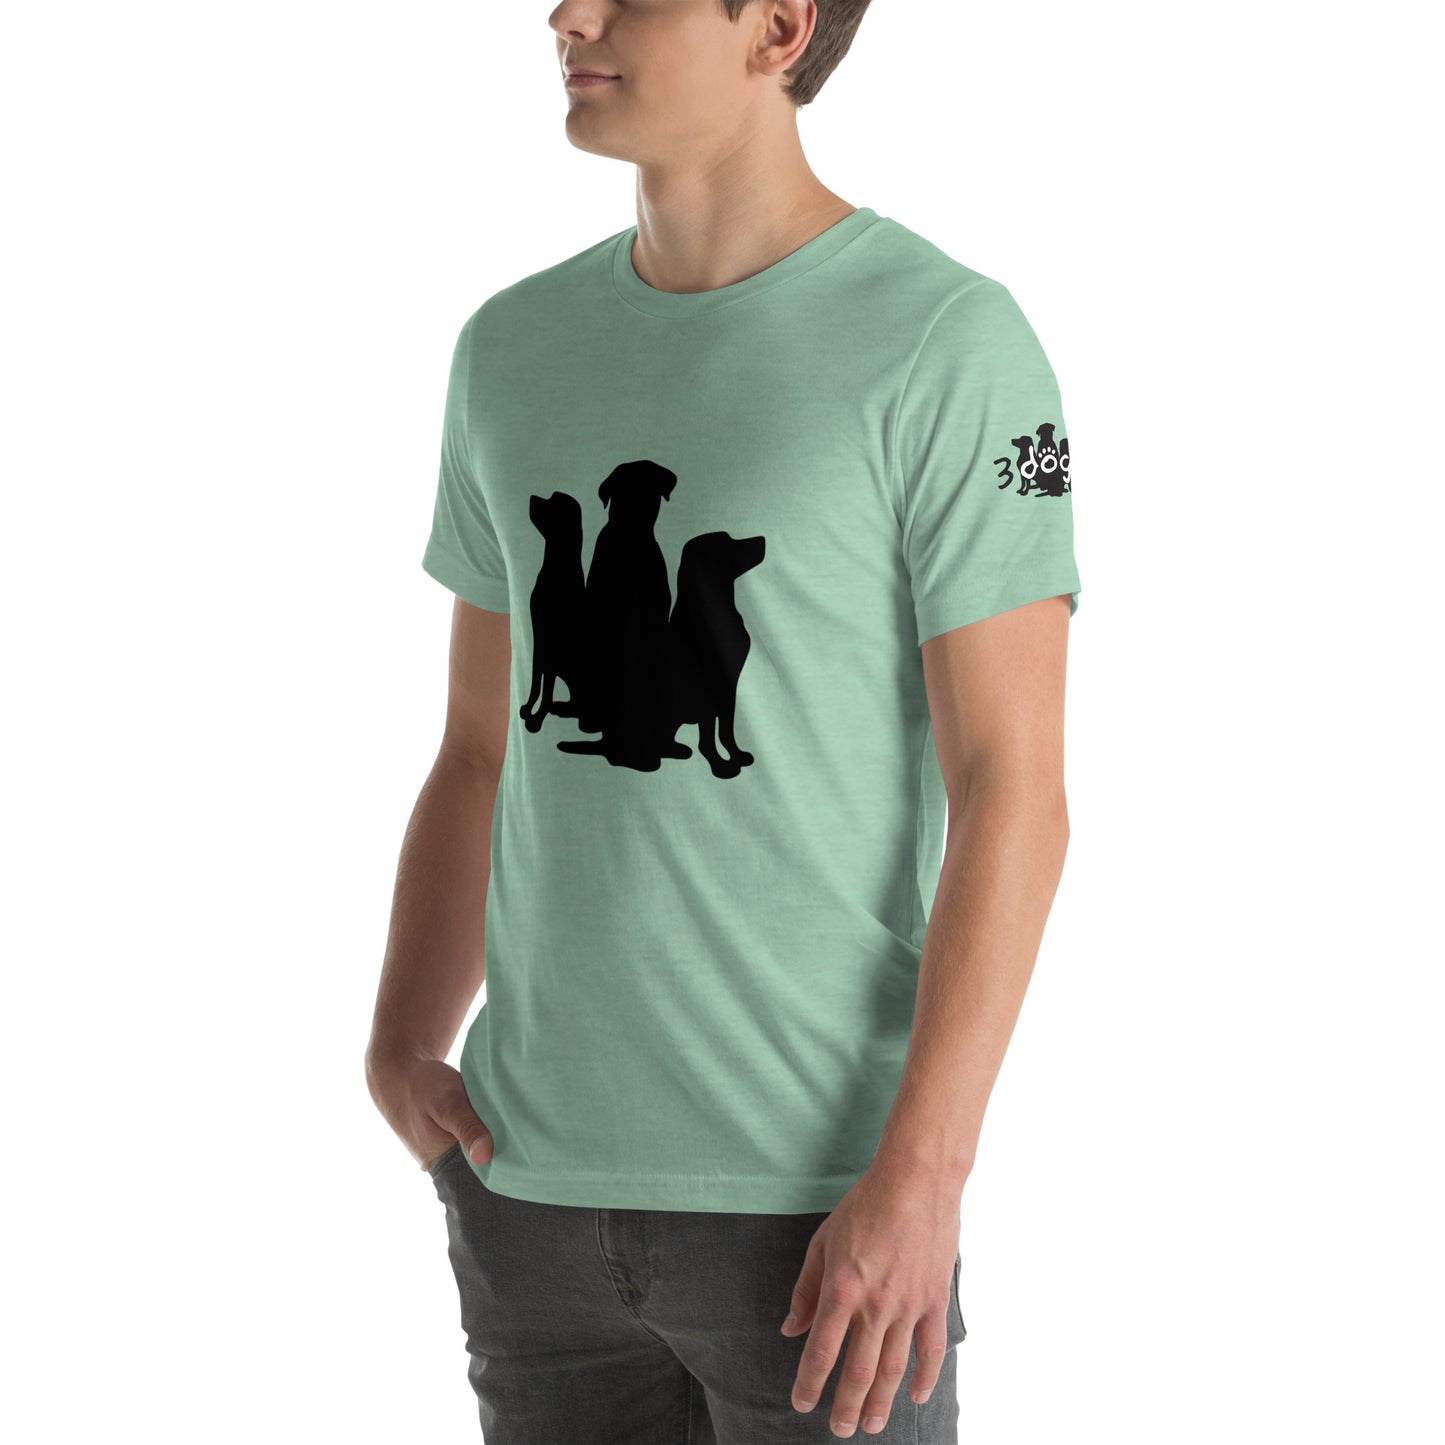 Unisex T-Shirt 3 Dogs with Full Logo Black